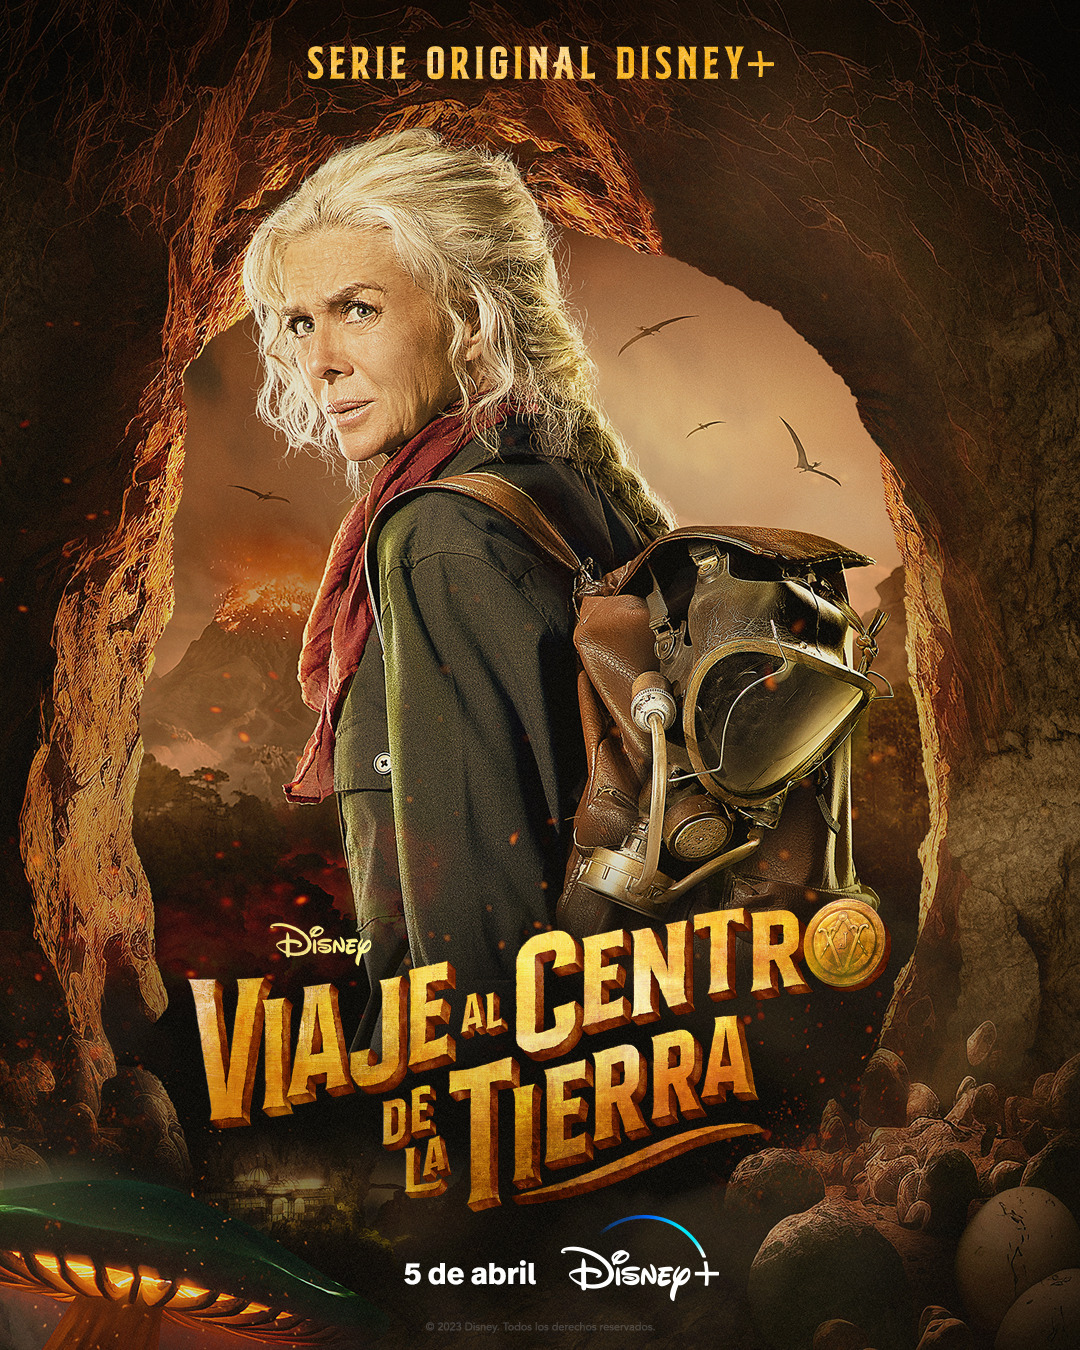 Extra Large TV Poster Image for Viaje al centro de la tierra (#8 of 8)